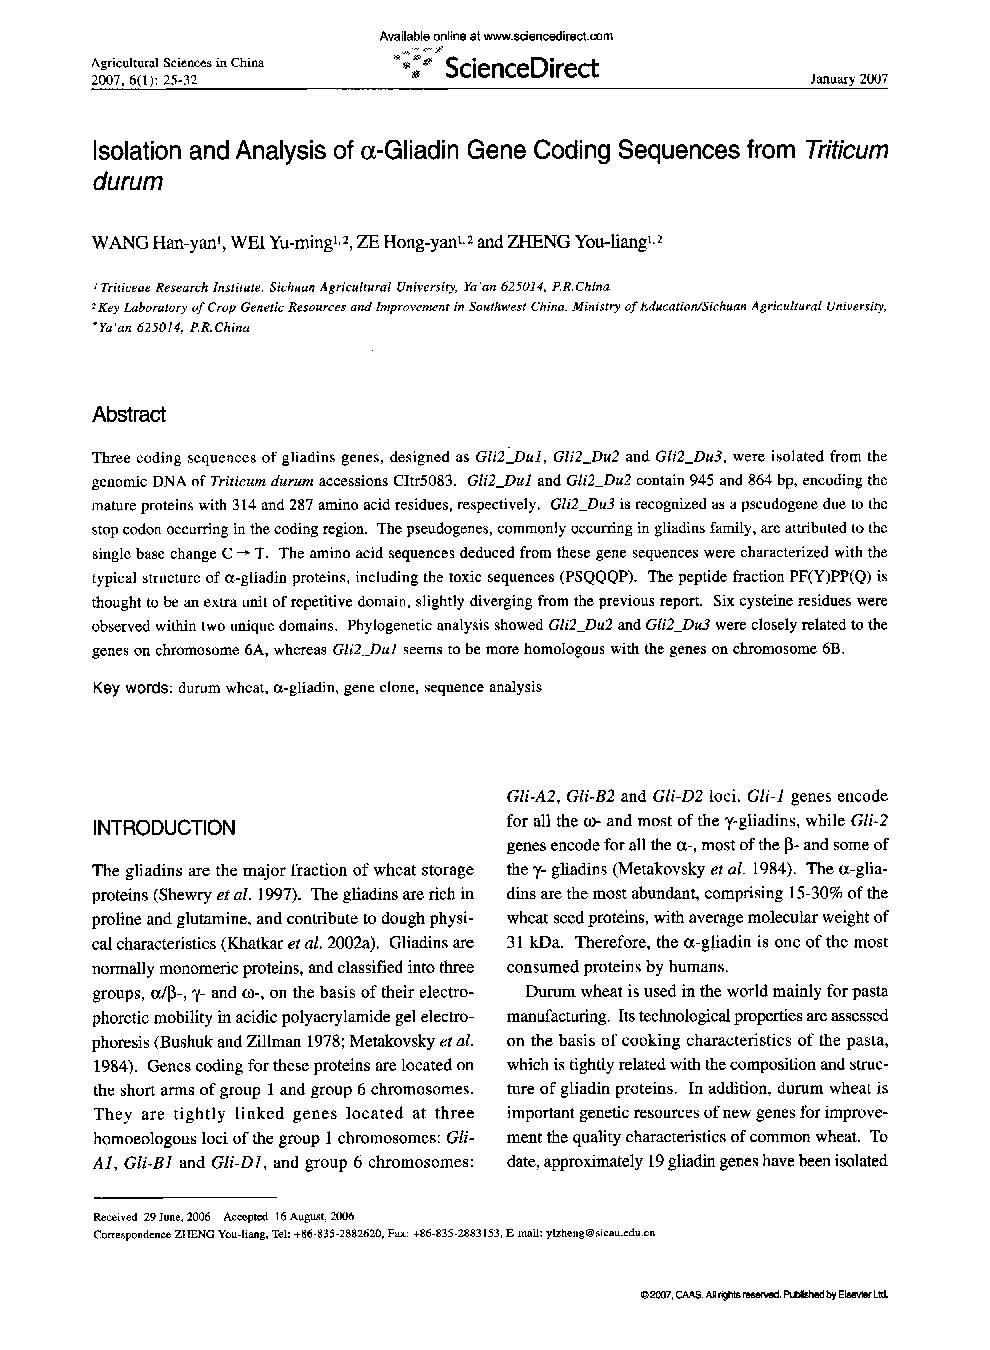 Isolation and Analysis of α-Gliadin Gene Coding Sequences from Triticum durum